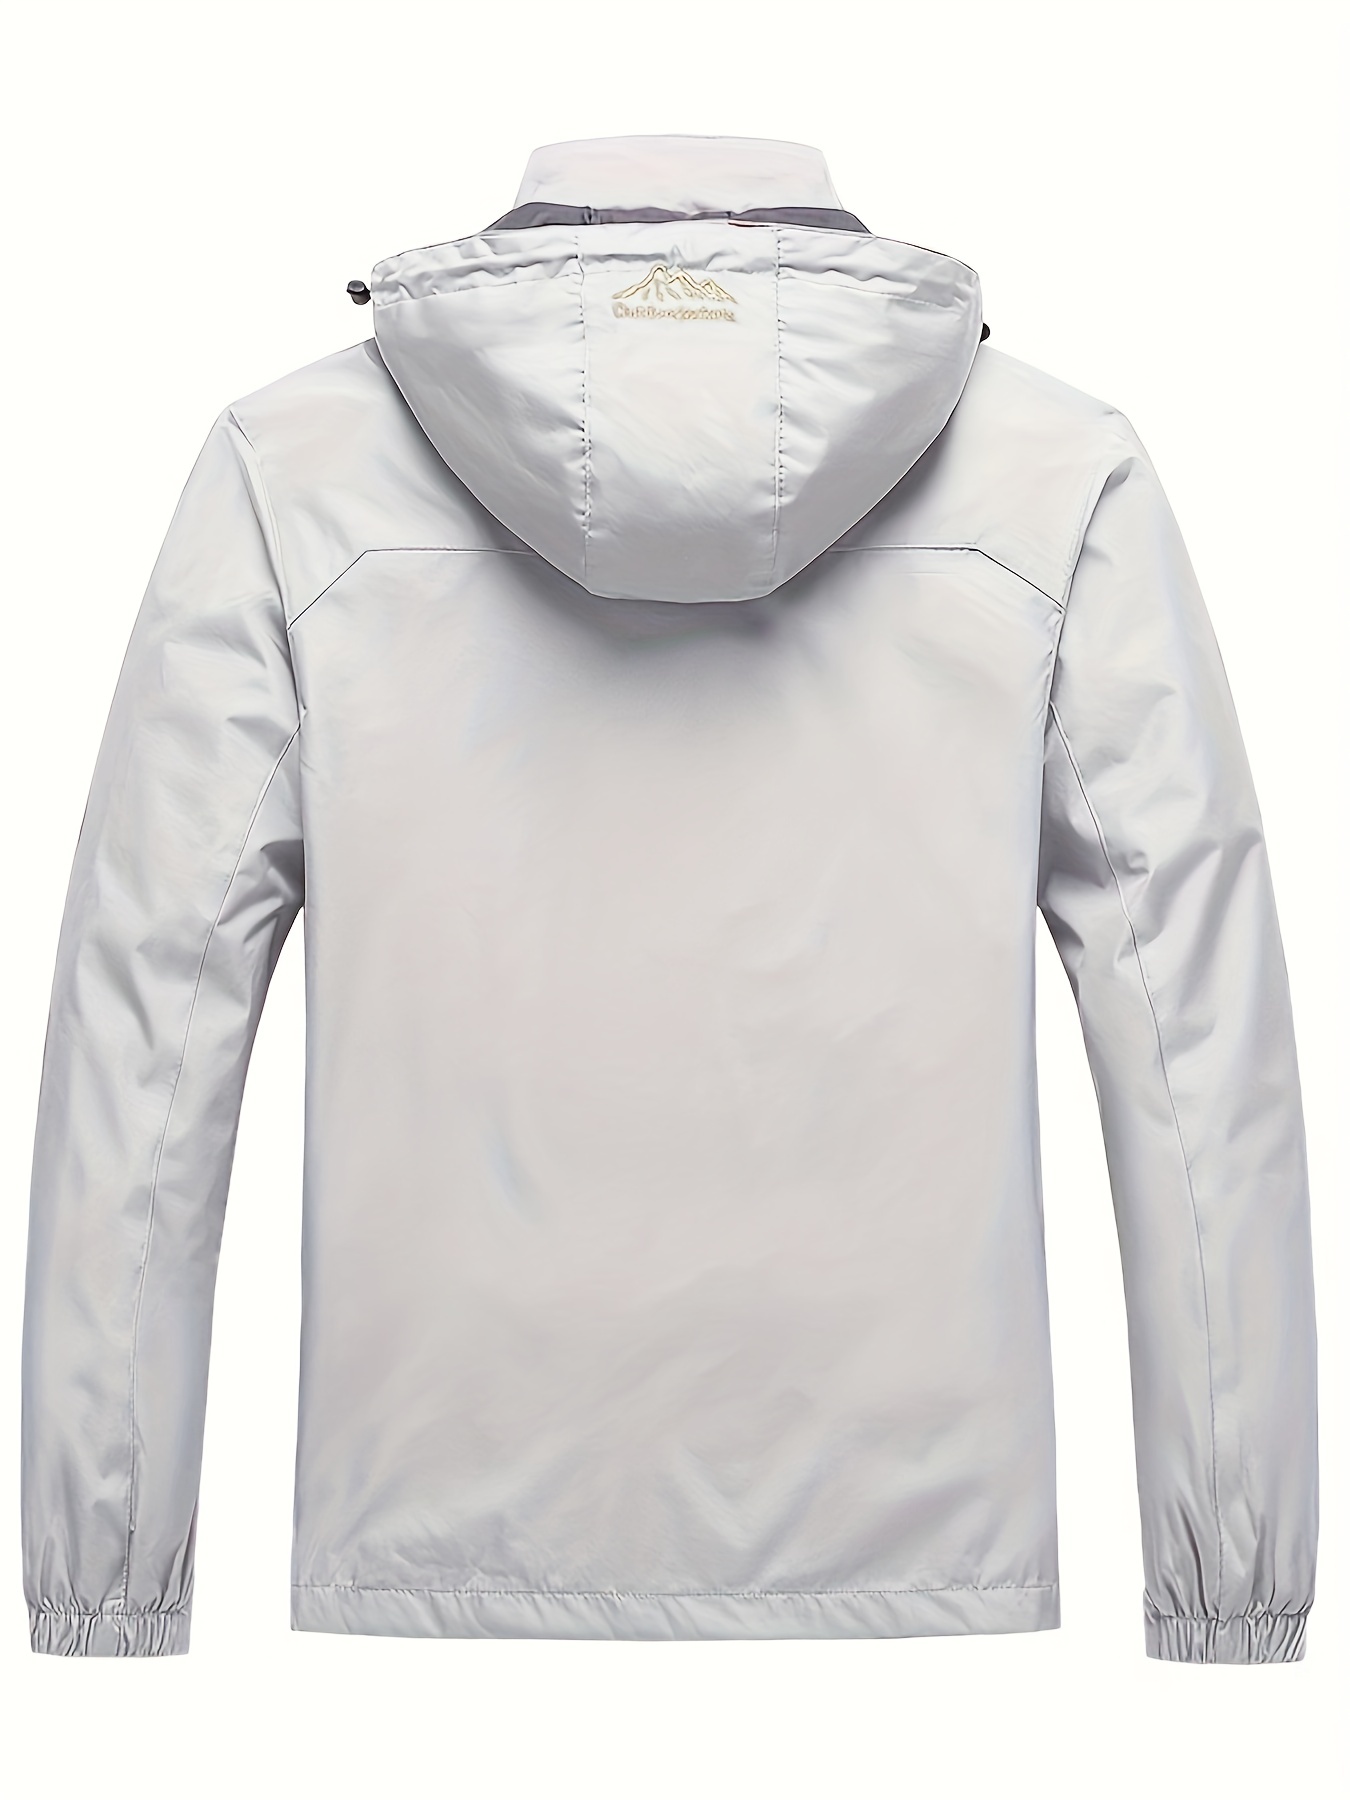 mens waterproof rain jacket lightweight raincoat windbreaker with hood for hiking travel outdoor details 1